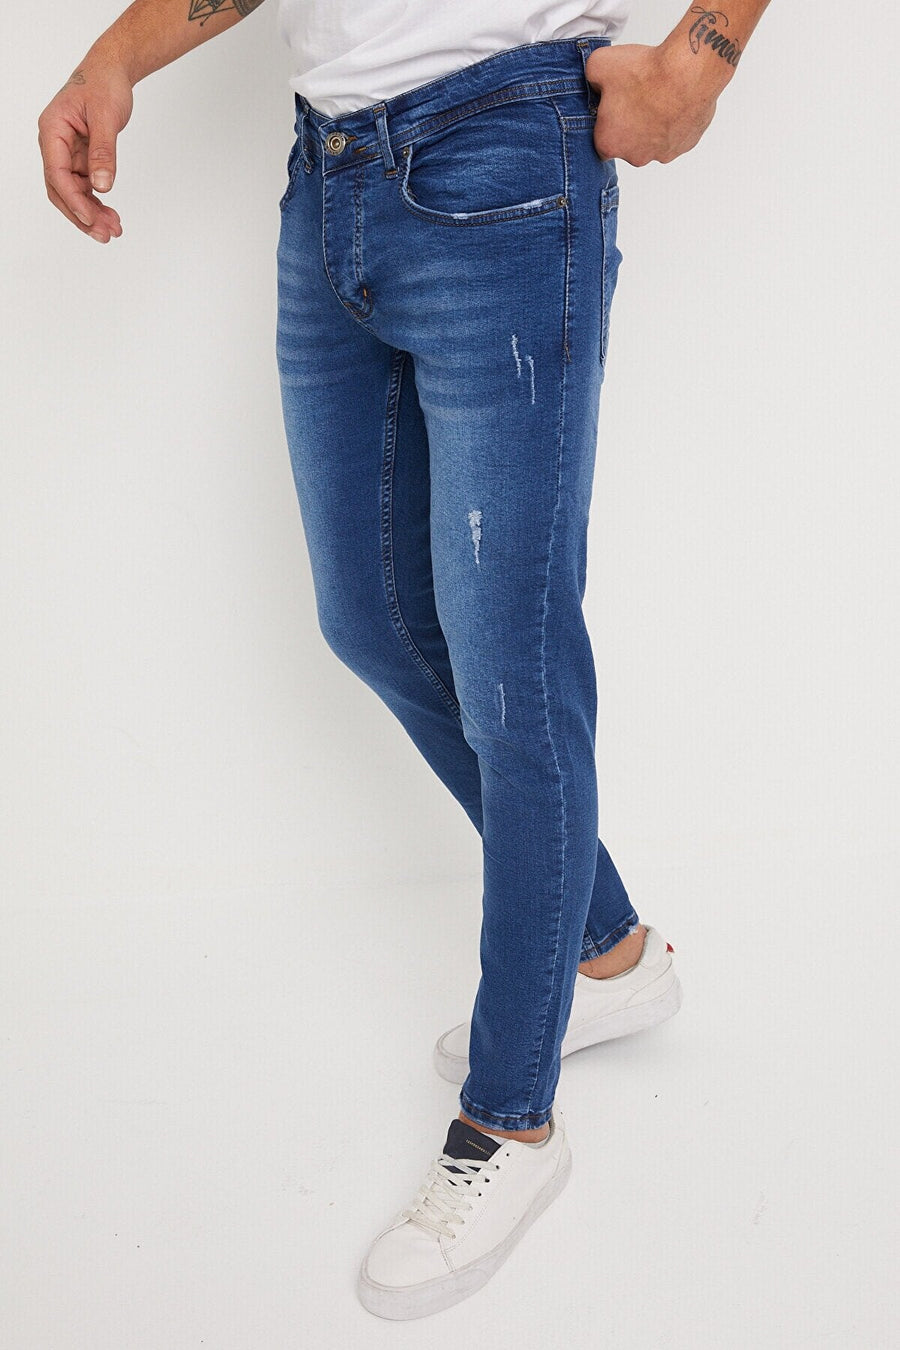 Blue Skinny Jeans NT8113